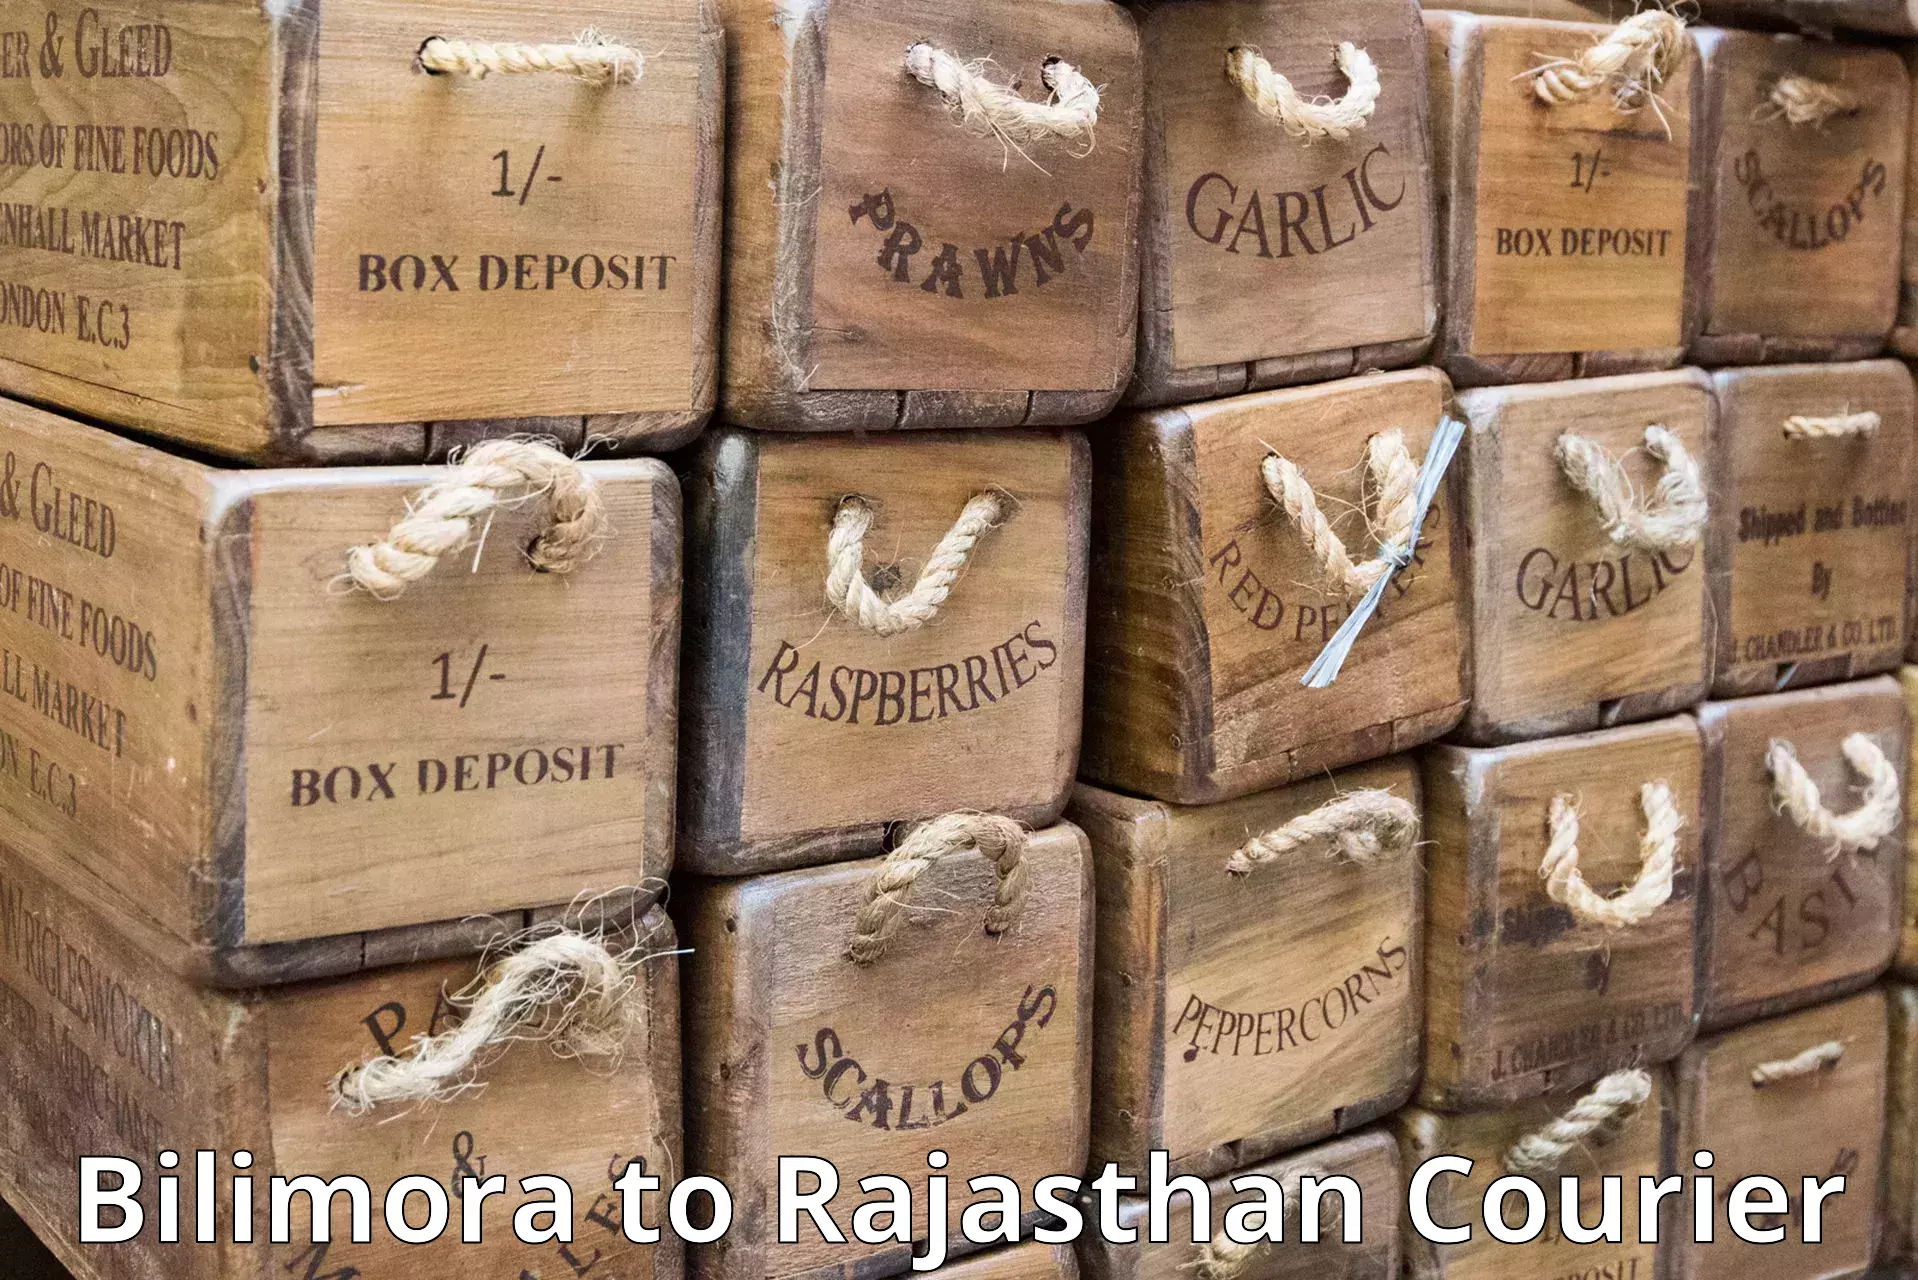 Courier service innovation Bilimora to Pratapgarh Rajasthan